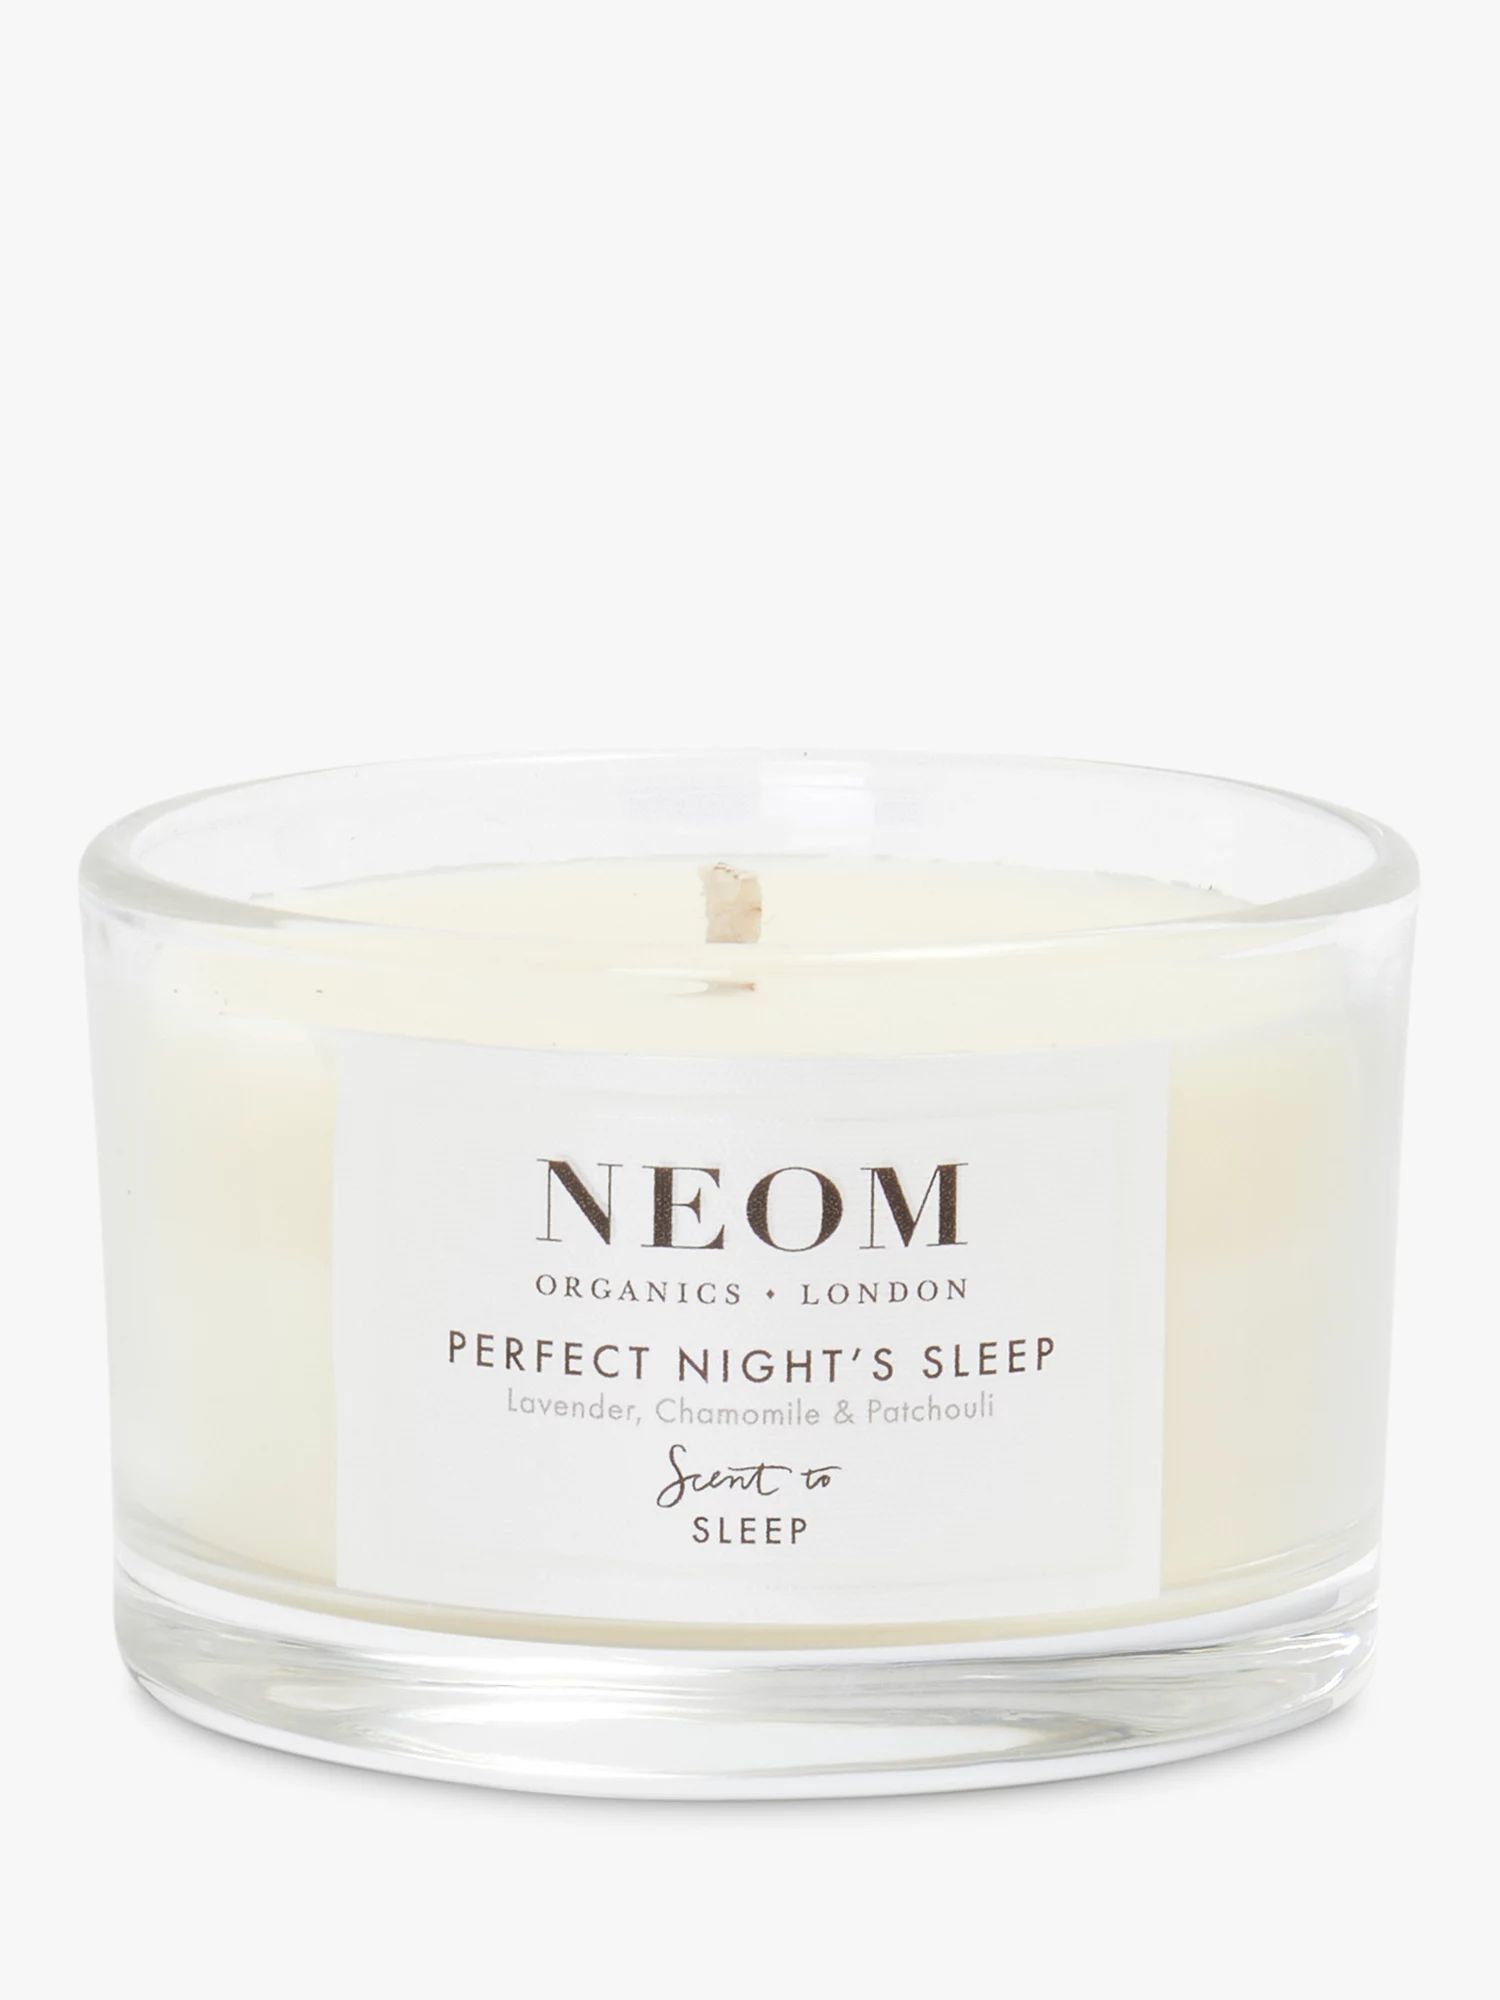 Neom Organics London Perfect Night's Sleep Travel Scented Candle | John Lewis (UK)